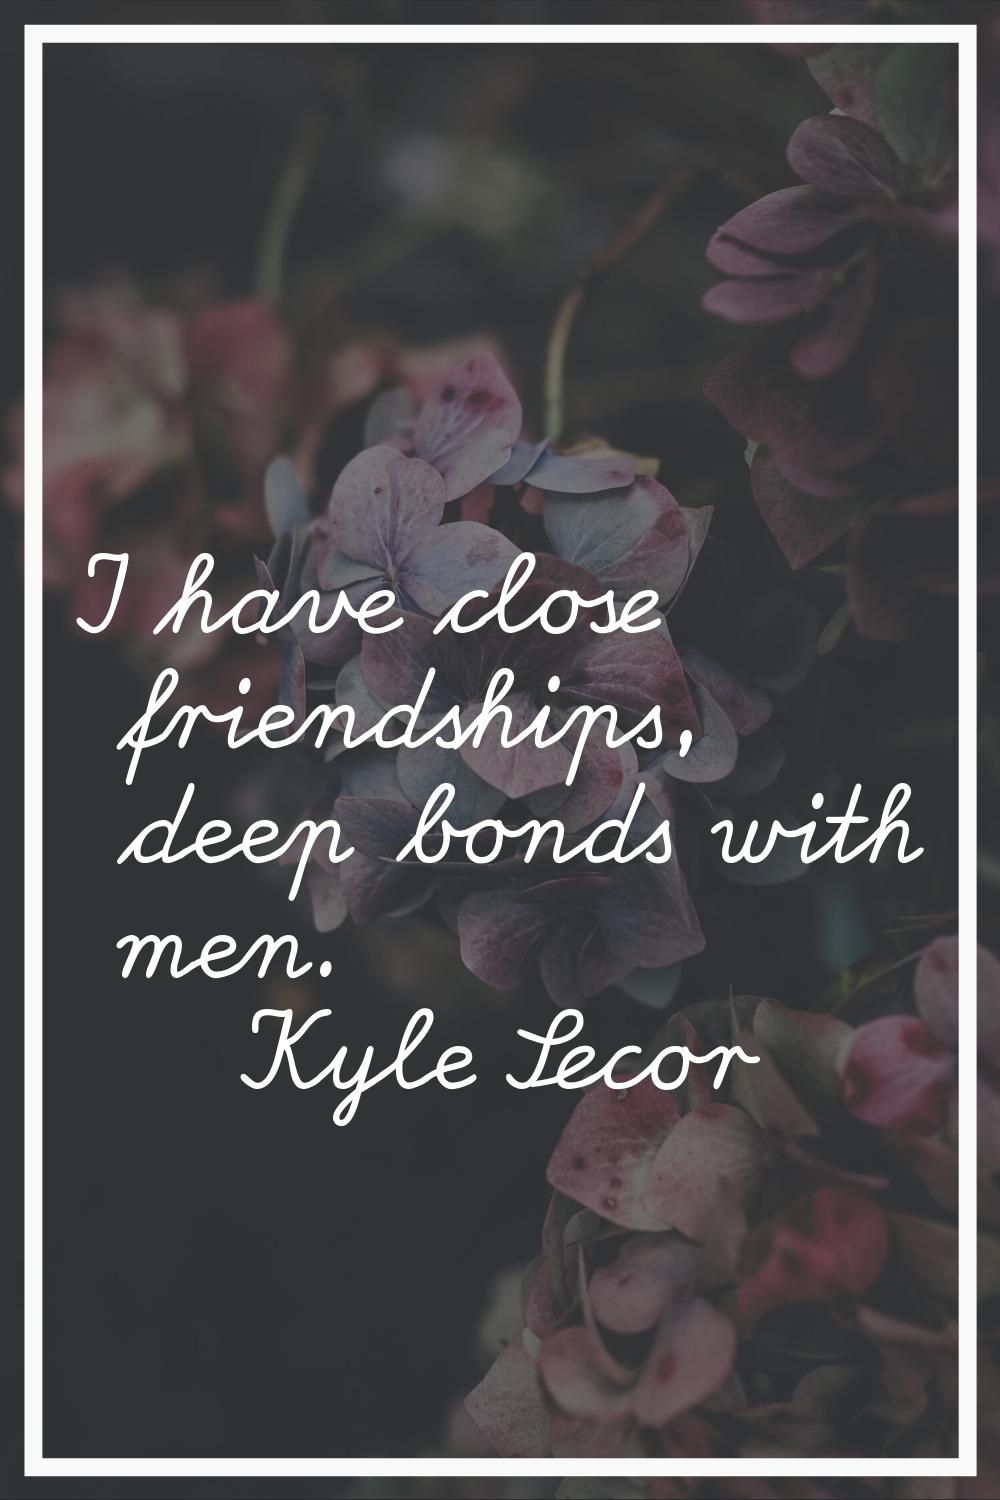 I have close friendships, deep bonds with men.